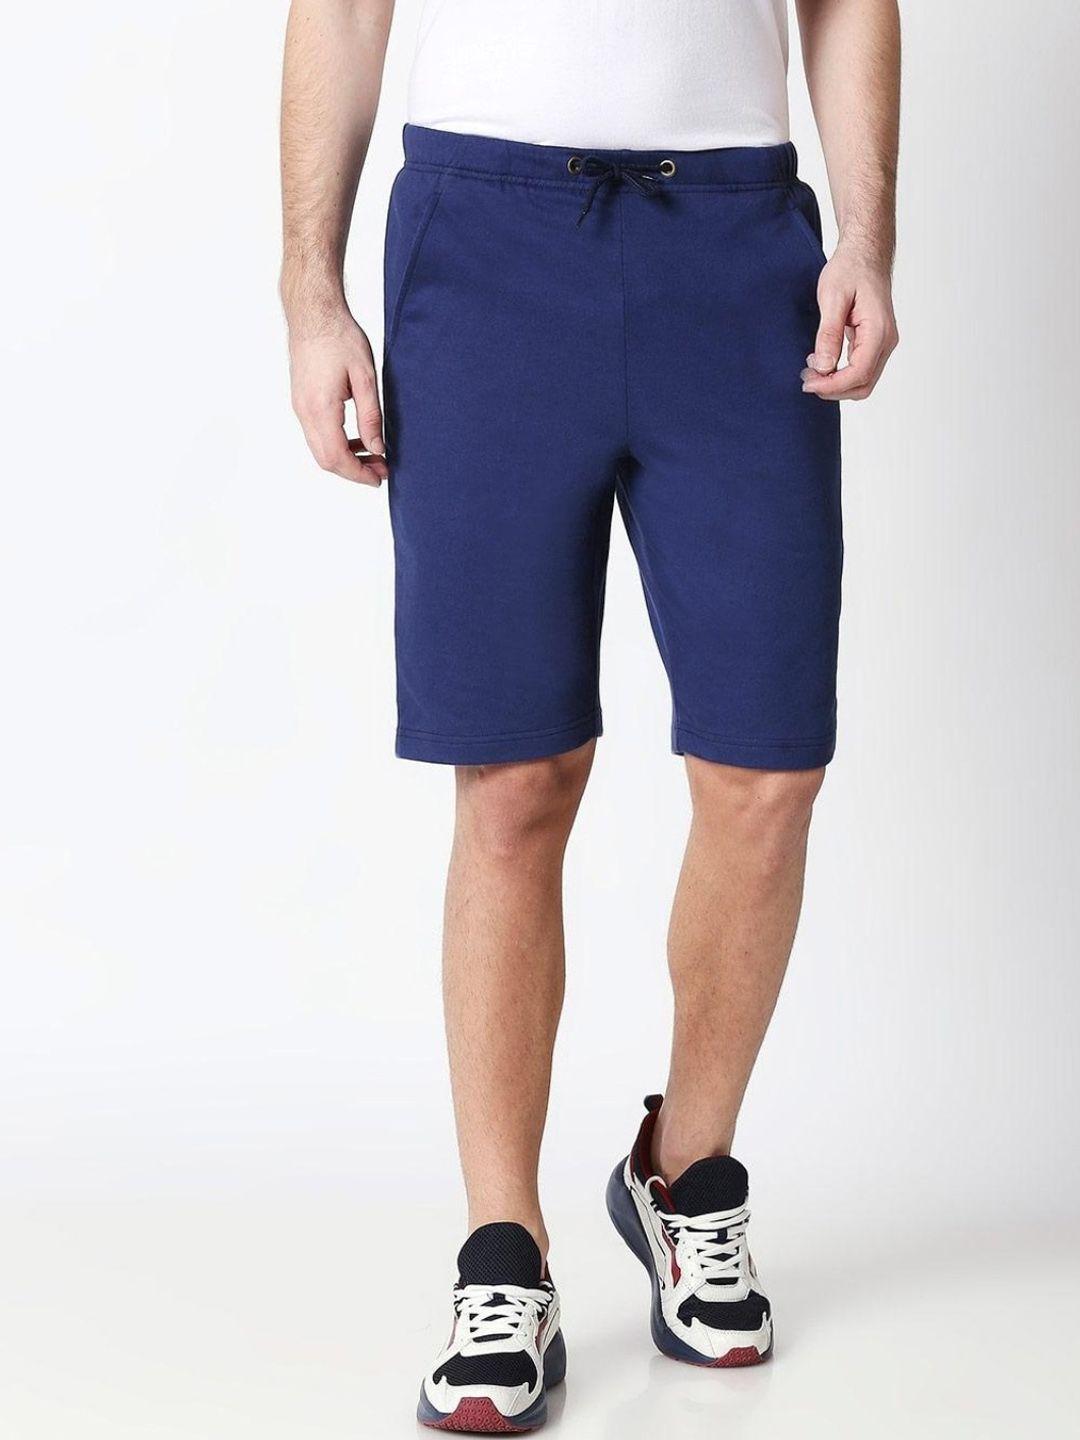 bewakoof-men-blue-mid-rise-knee-length-cotton-shorts